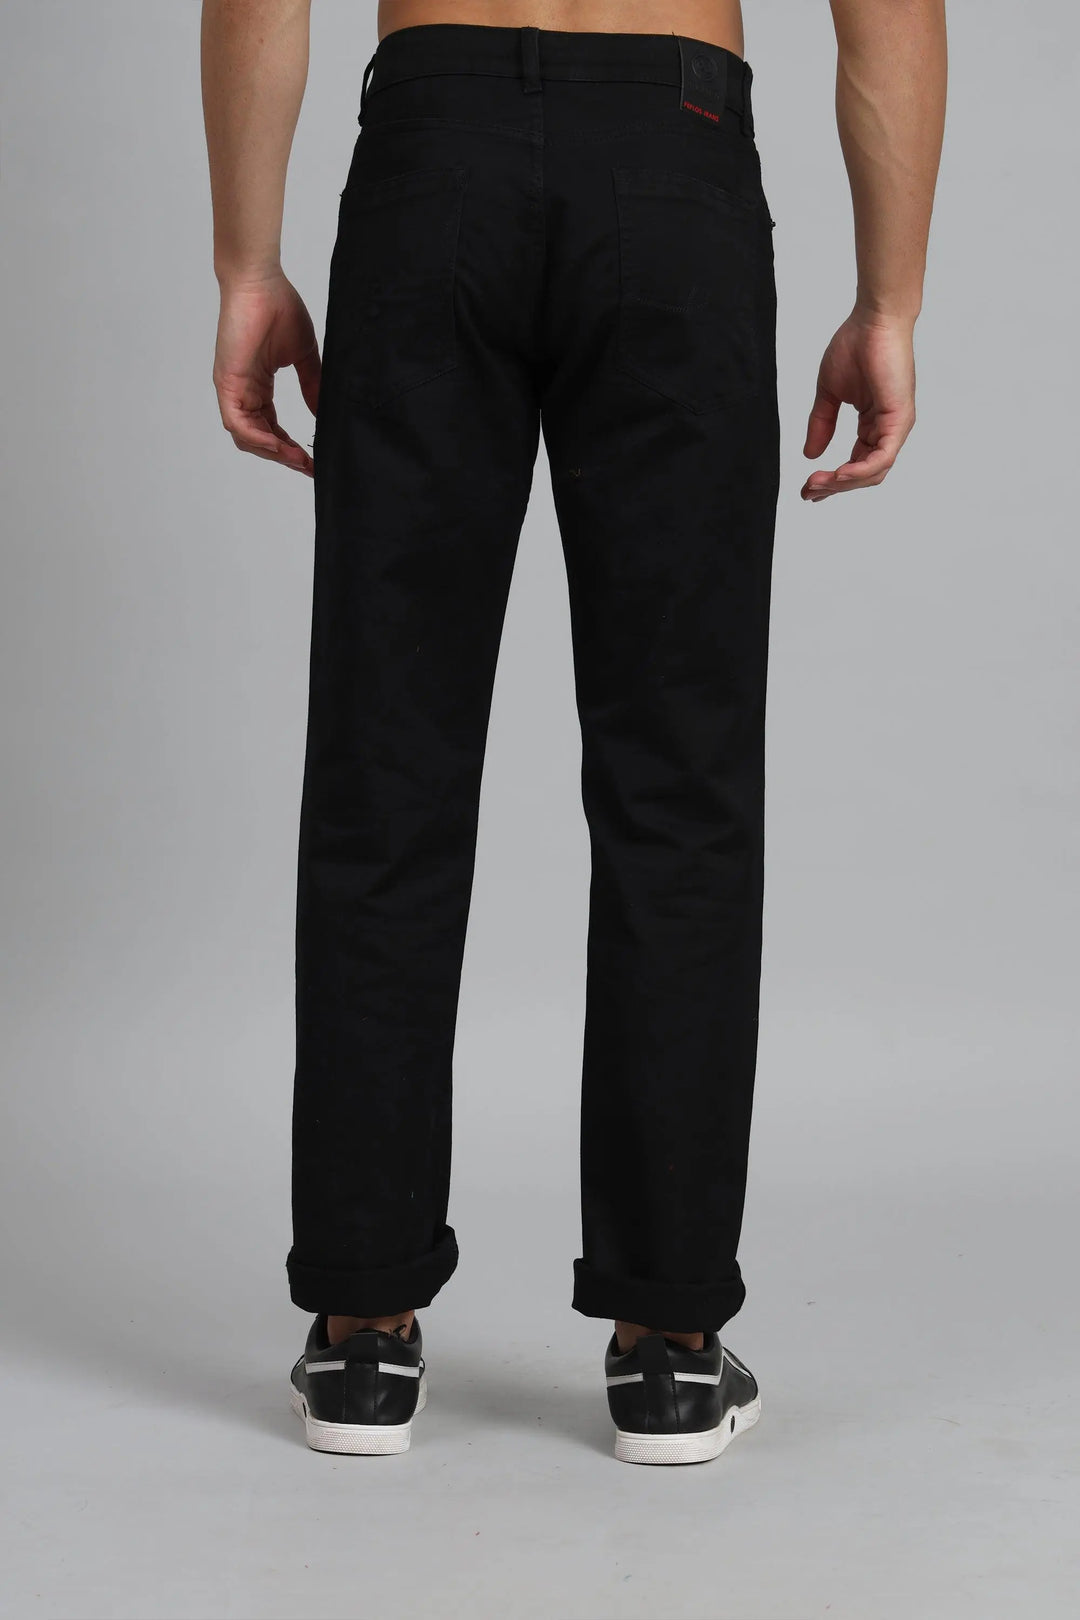 Relaxed Fit Dobby Black Premium Fabric Denim Jeans For Men - Peplos Jeans 